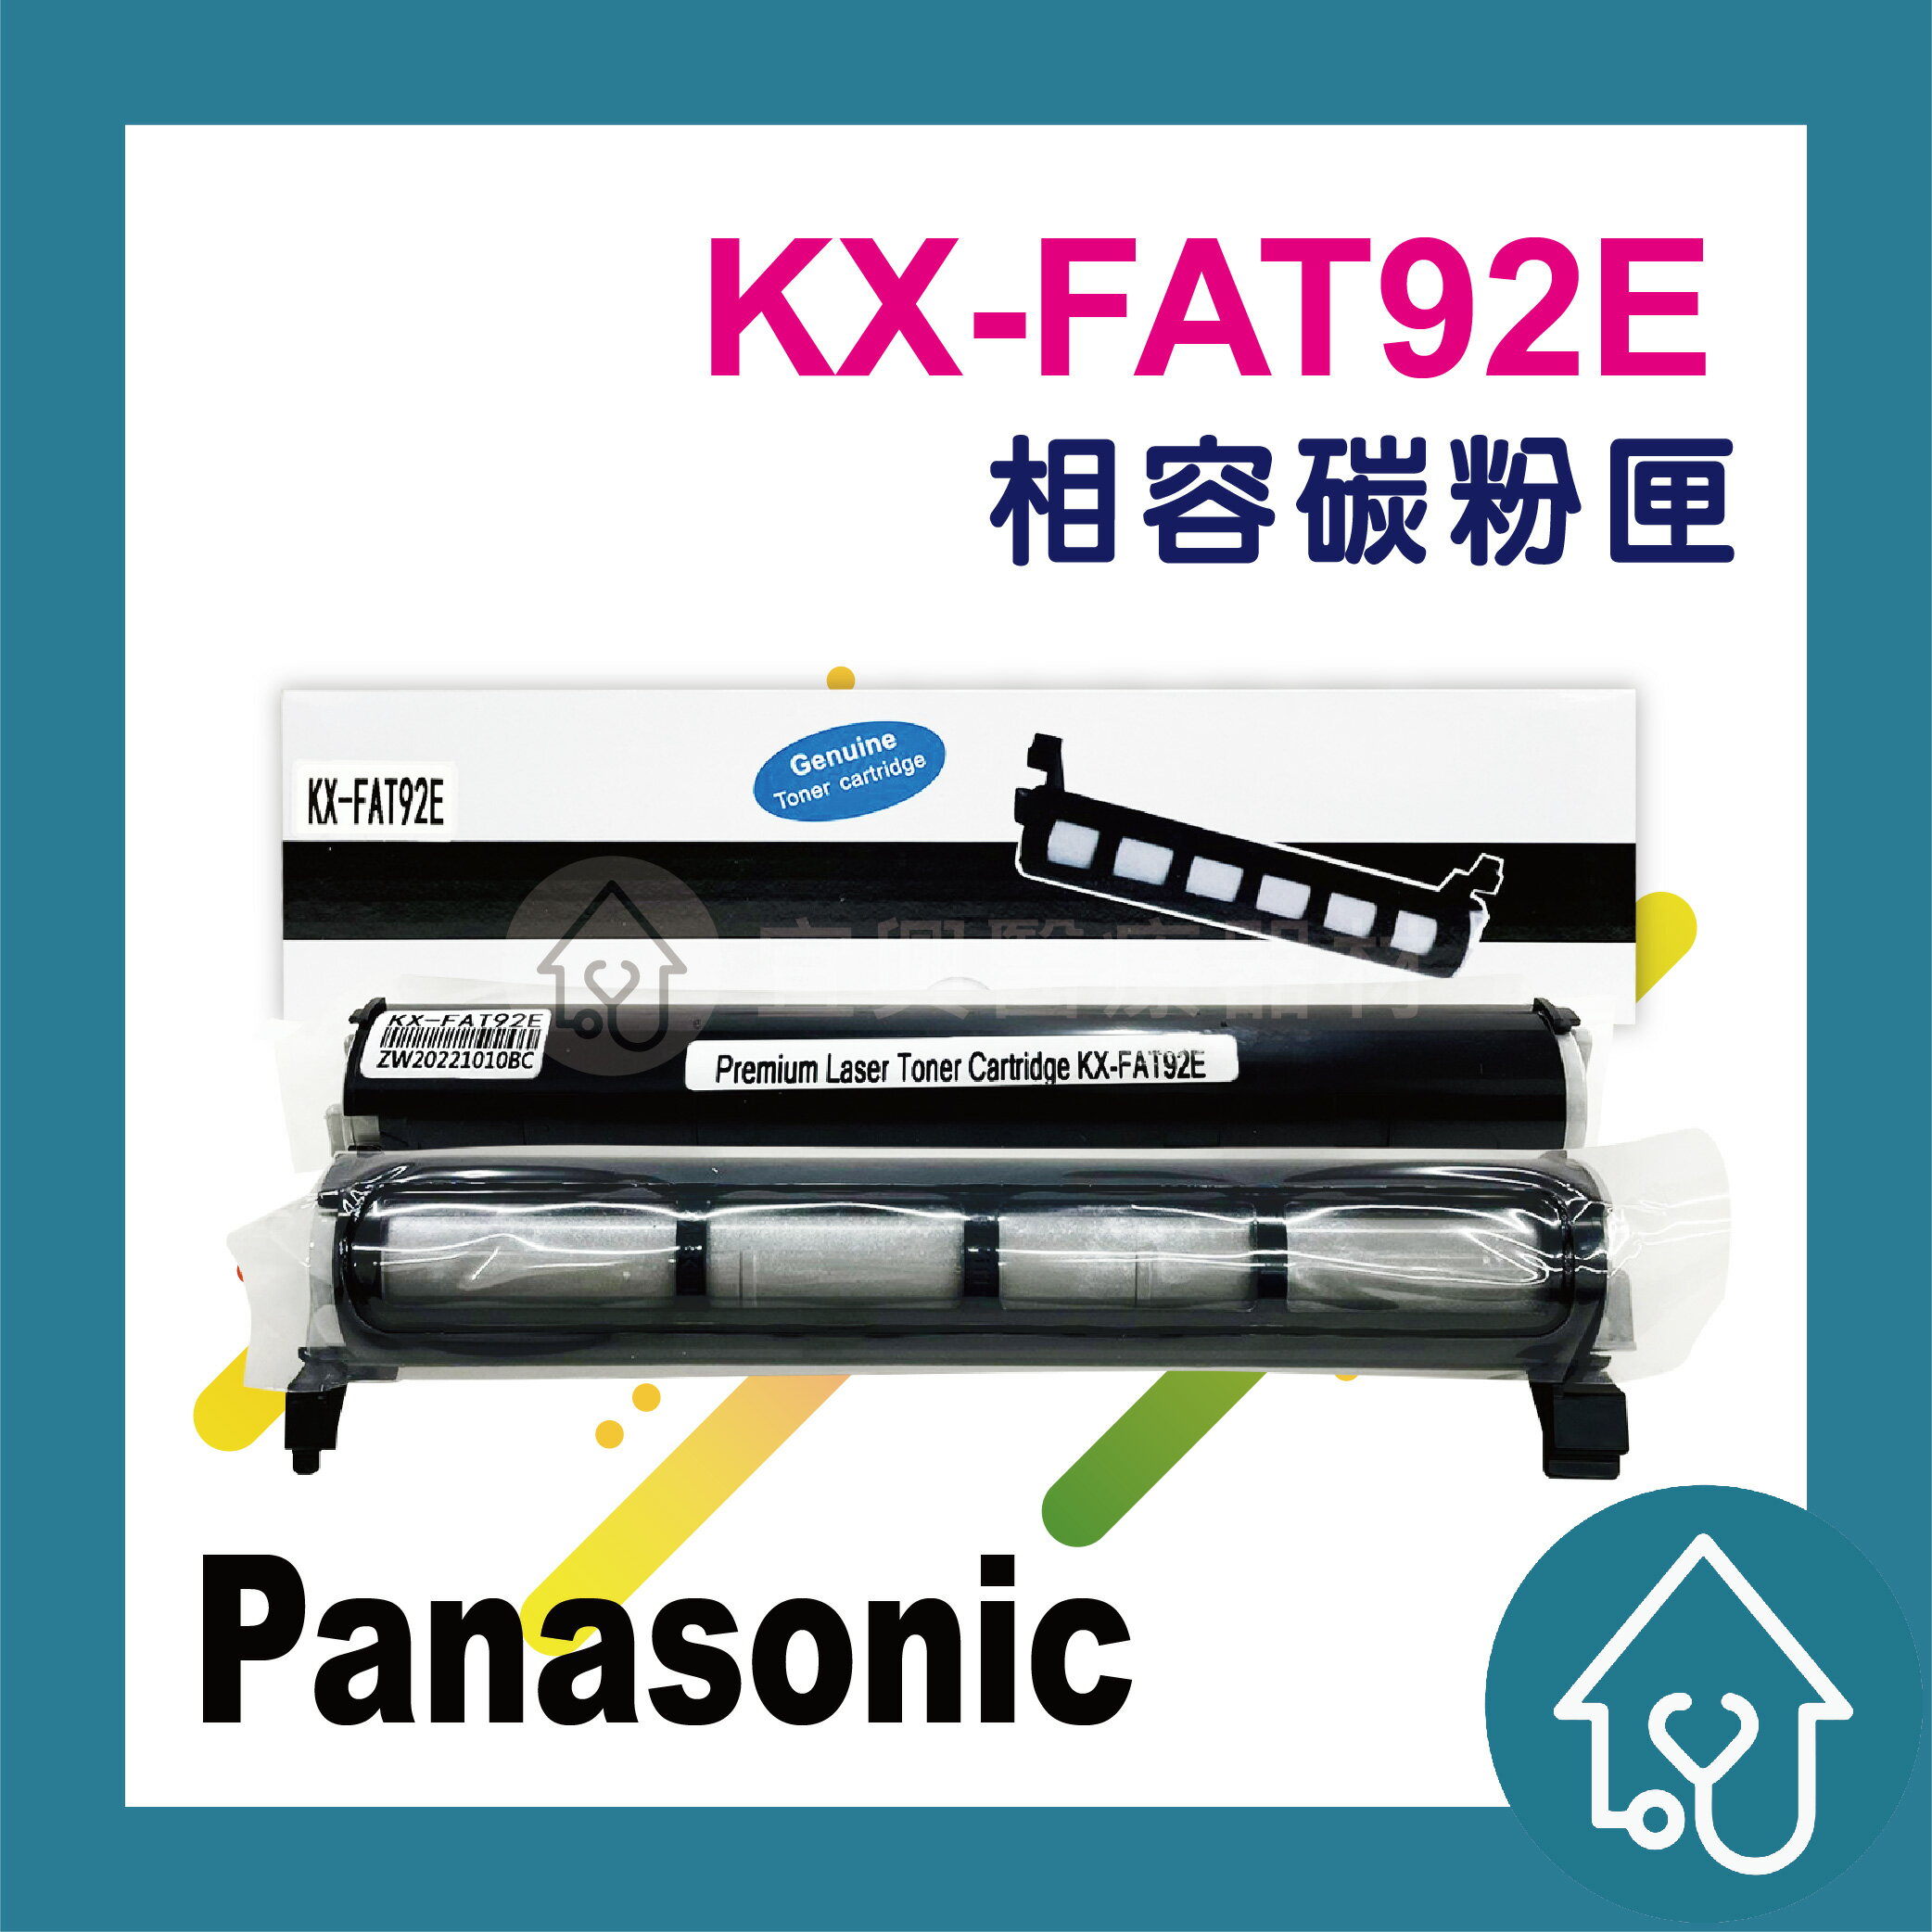 Panasonic KX-FAT92E 副廠碳粉匣 KX-FAT92 KX-FAT92E/KX-FAT94CN KX-MB778/KX-MB788/KX-MB781/KX-MB262/KX-MB263/KX-MB772/KX-MB773/KX-MB783/KX-MB271 KX-FAT92E